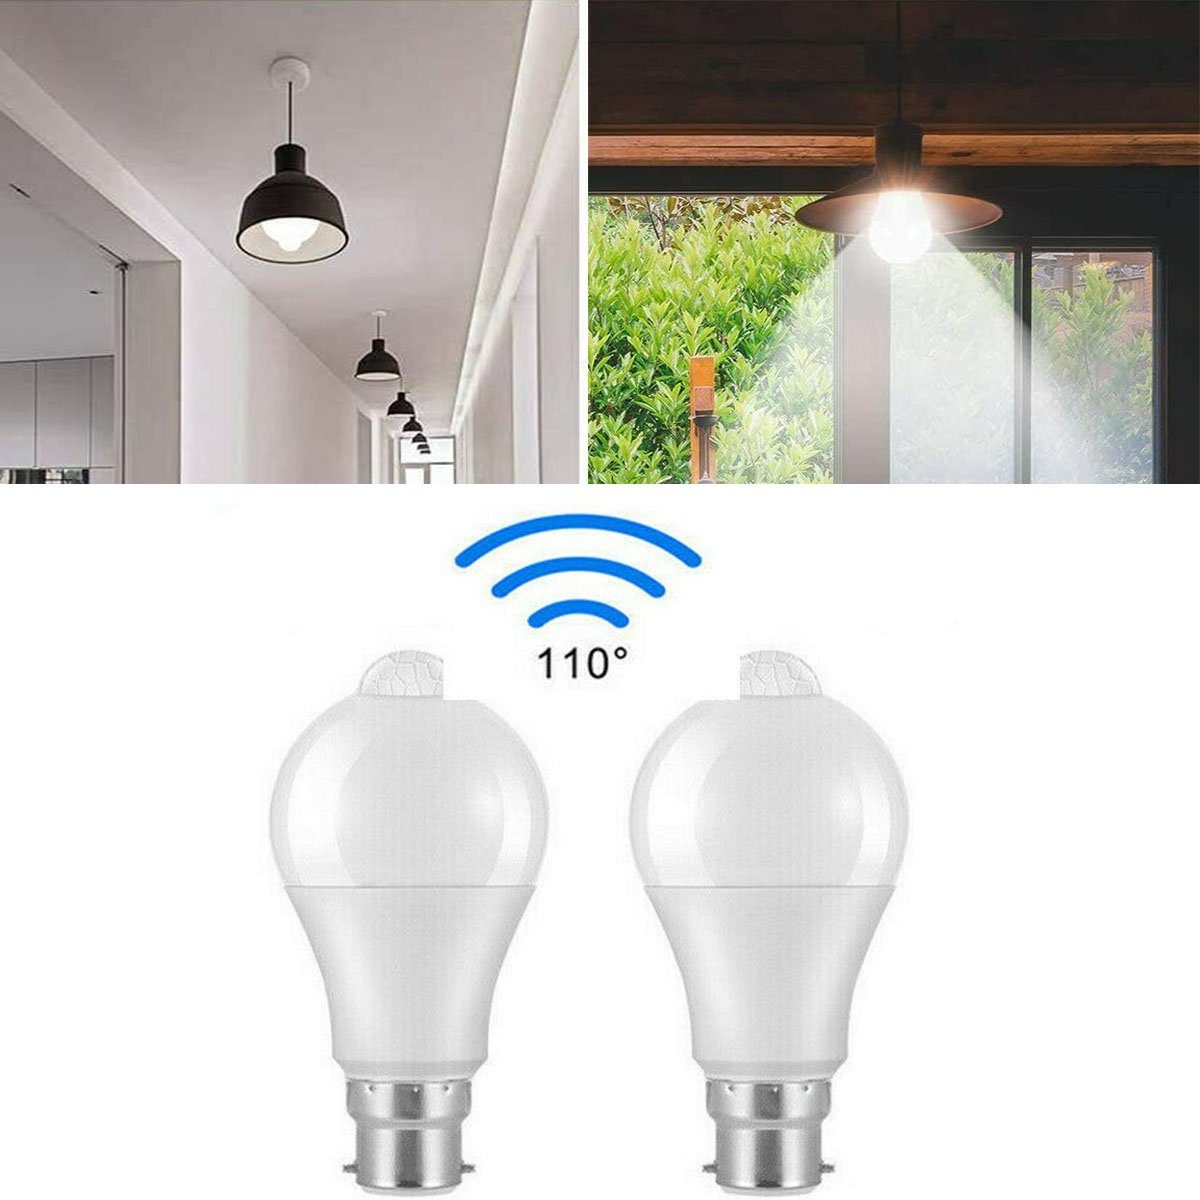 oyajia E27 LED Intelligente Lampe, 12W LED-Lampe mit Bewegungssensor Sensor Smarte  Lampe, Automatische Glühbirne für Haustür Balkon Garage Treppen,1/2/4 Stück